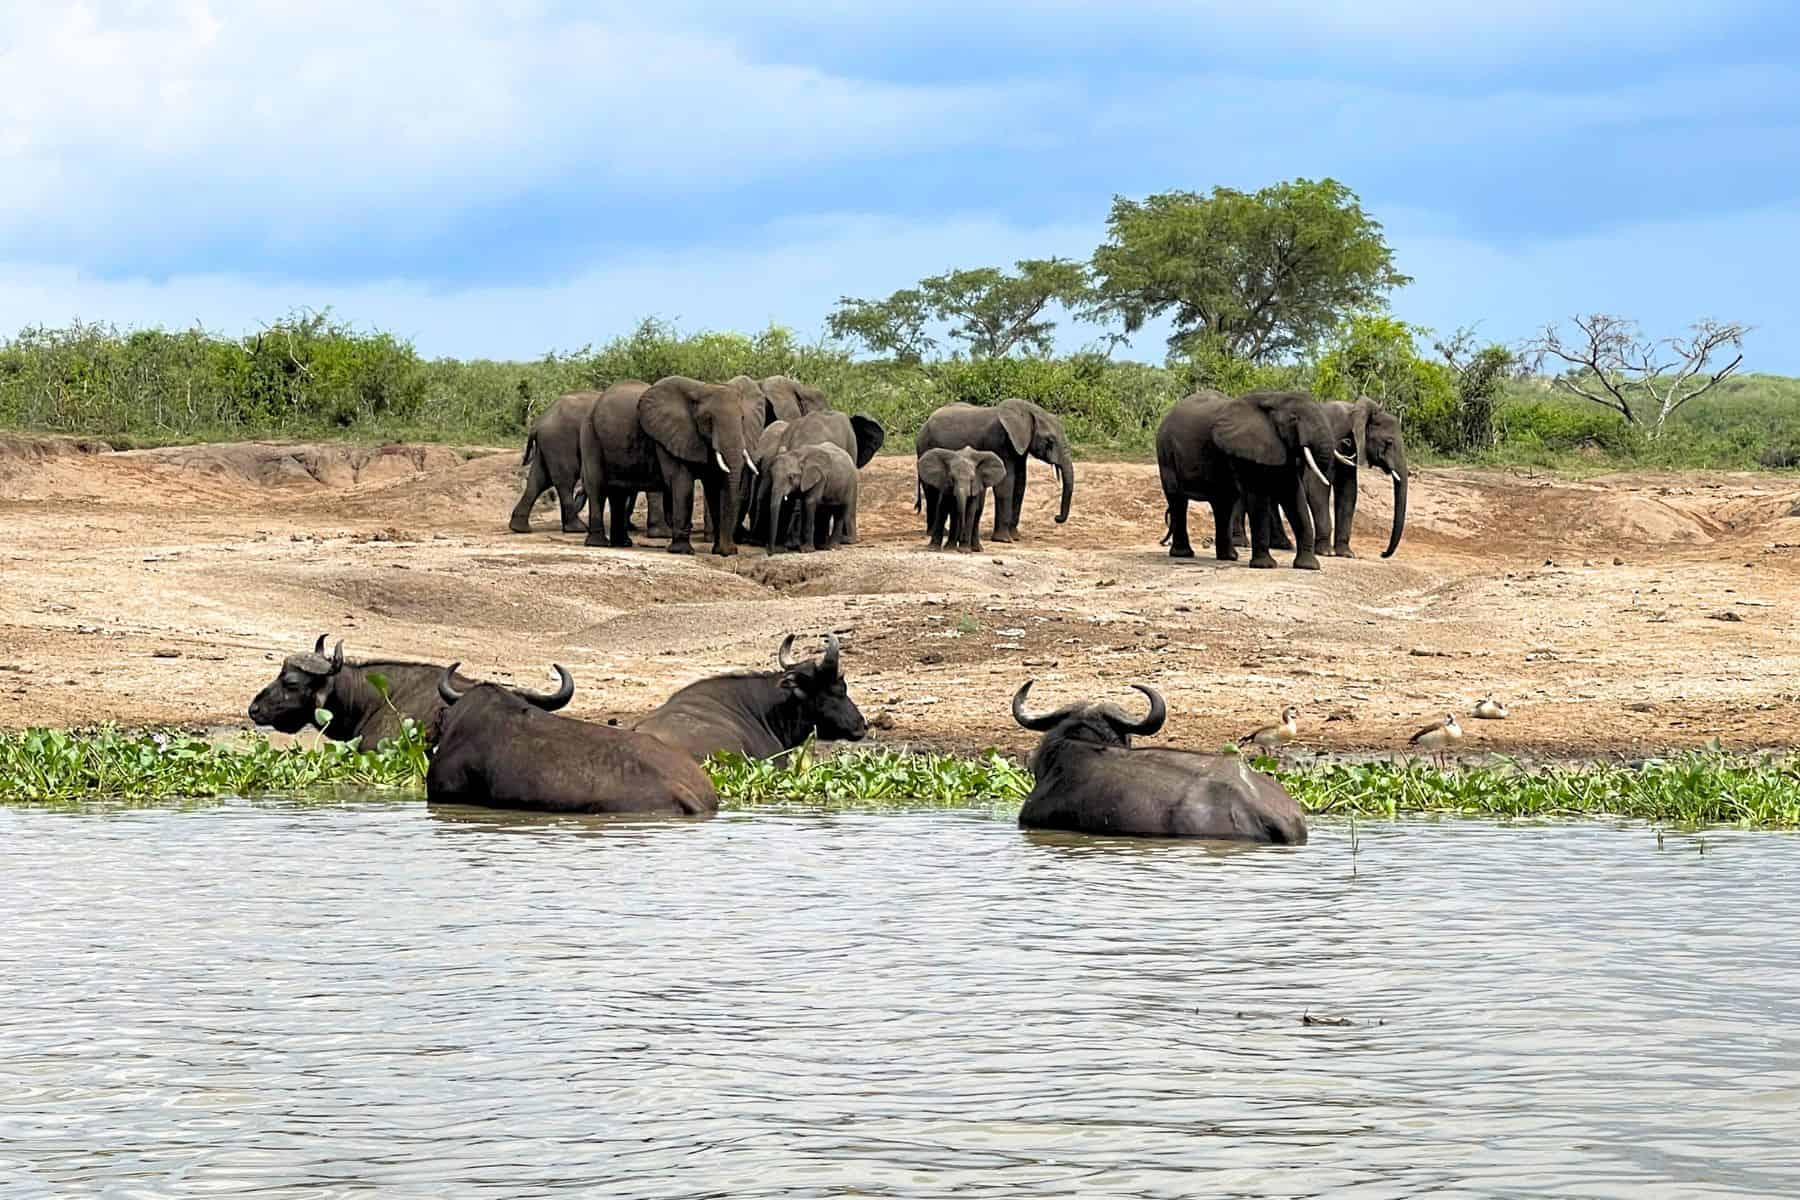 Elephants and African buffalo seen near on the shore of the Kazinga Channel on a water safari in Uganda